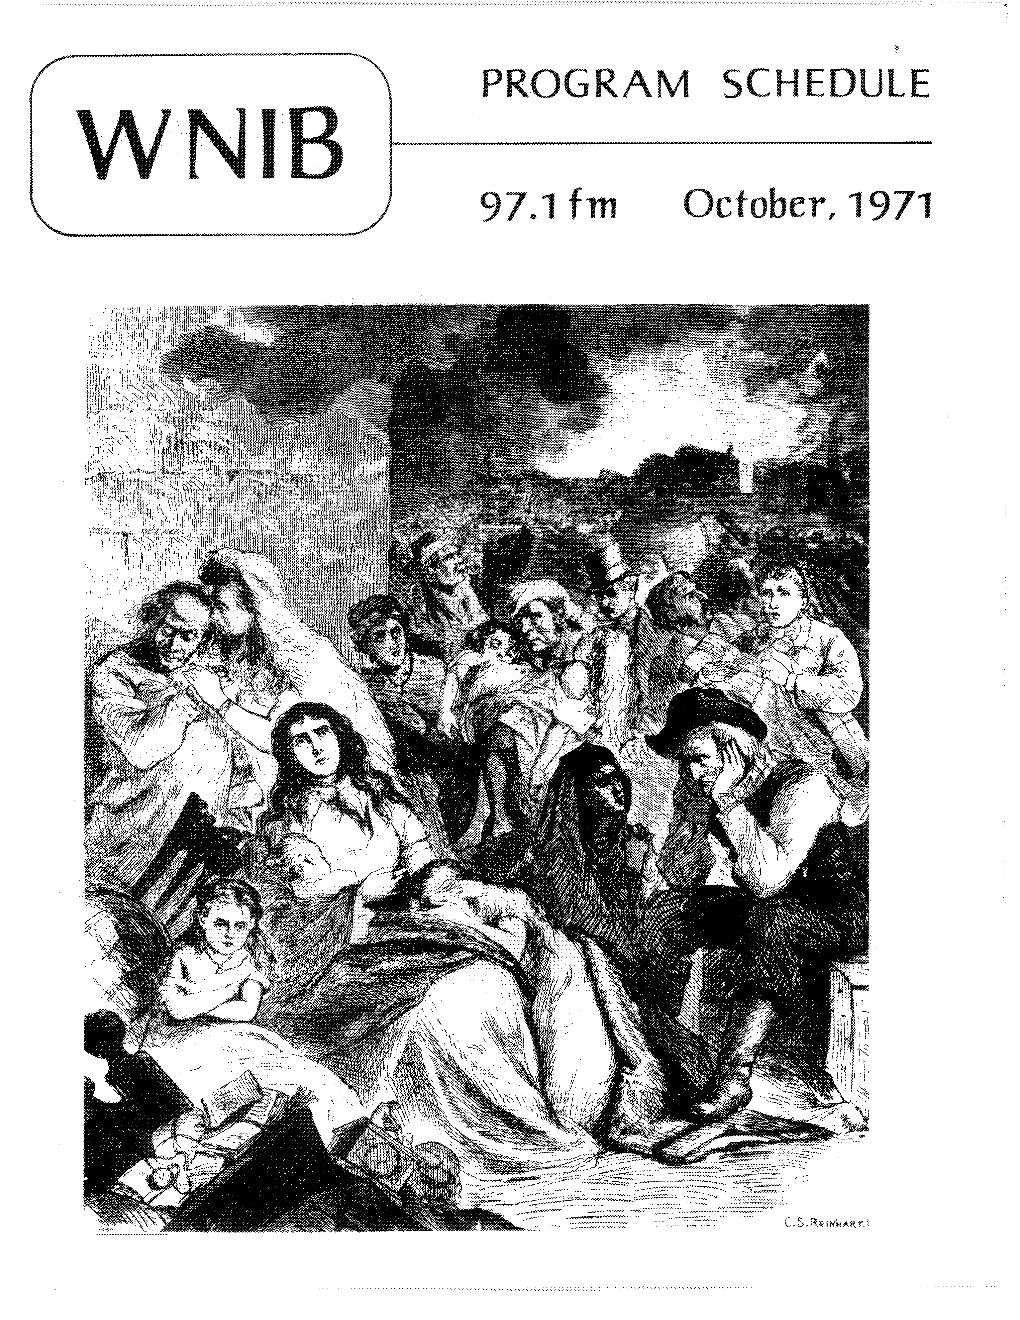 WNIB Program Schedule October 1971